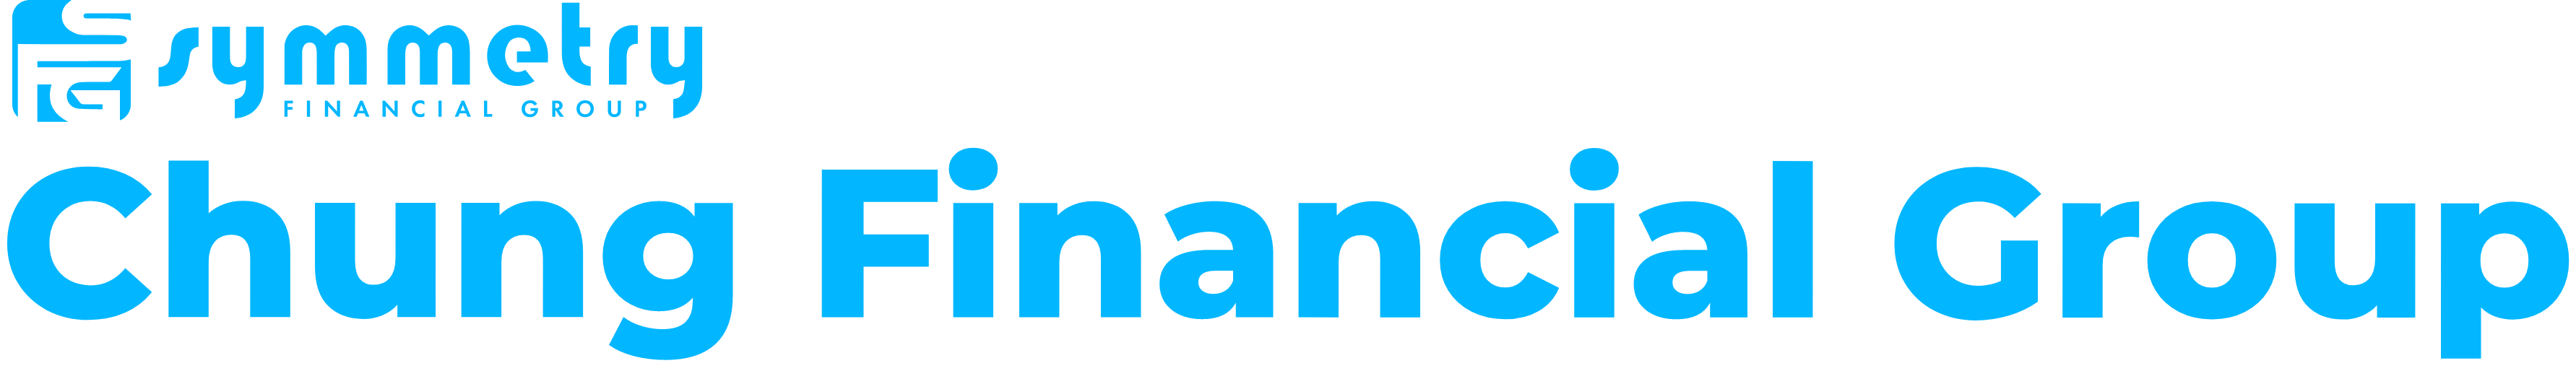 Chung Financial Group logo